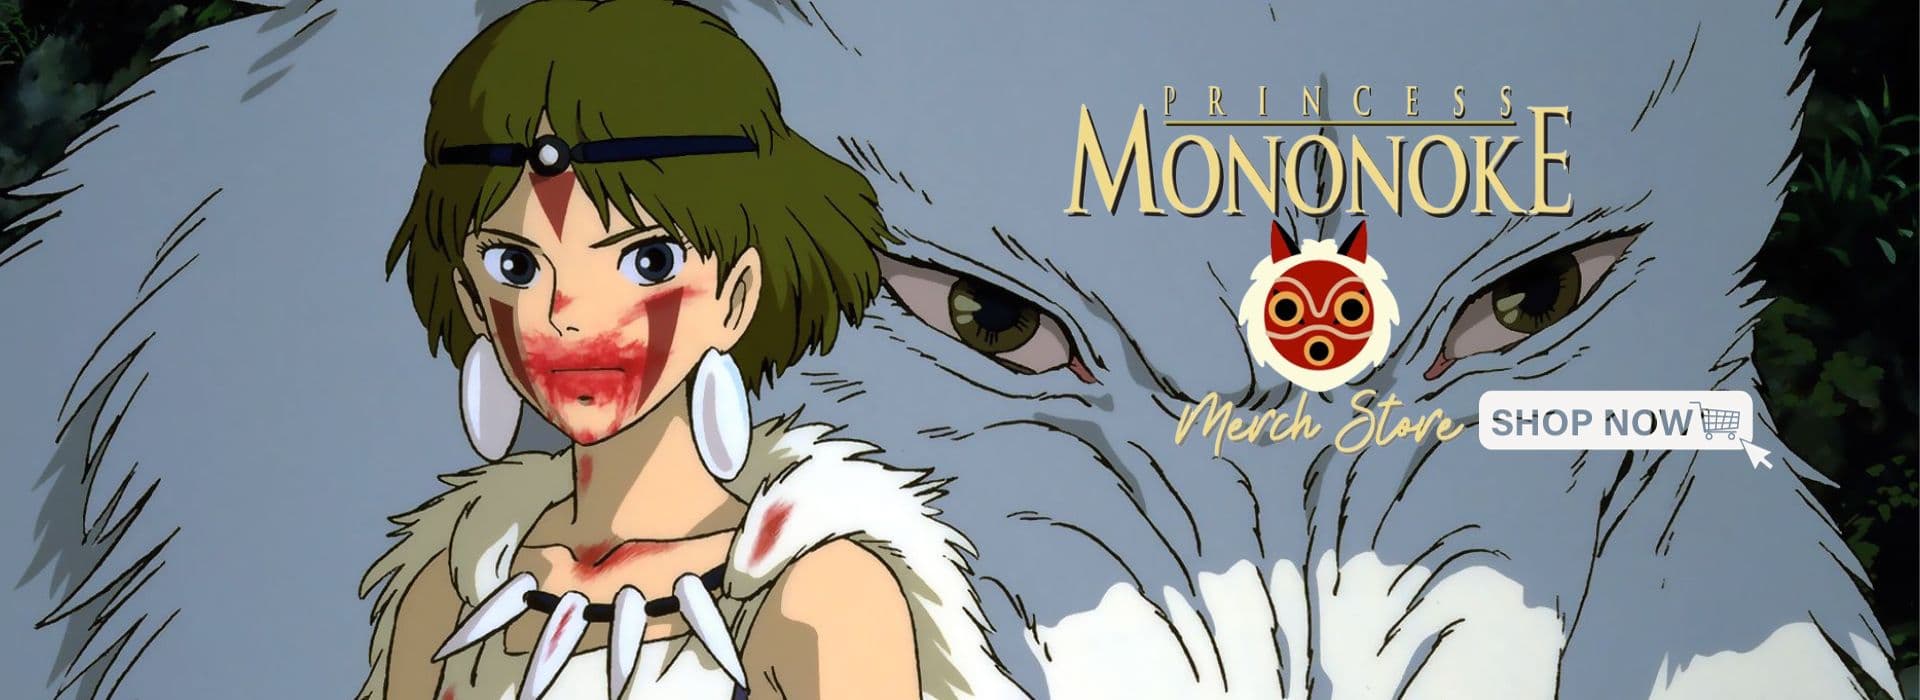 Princess Mononoke Banner 1